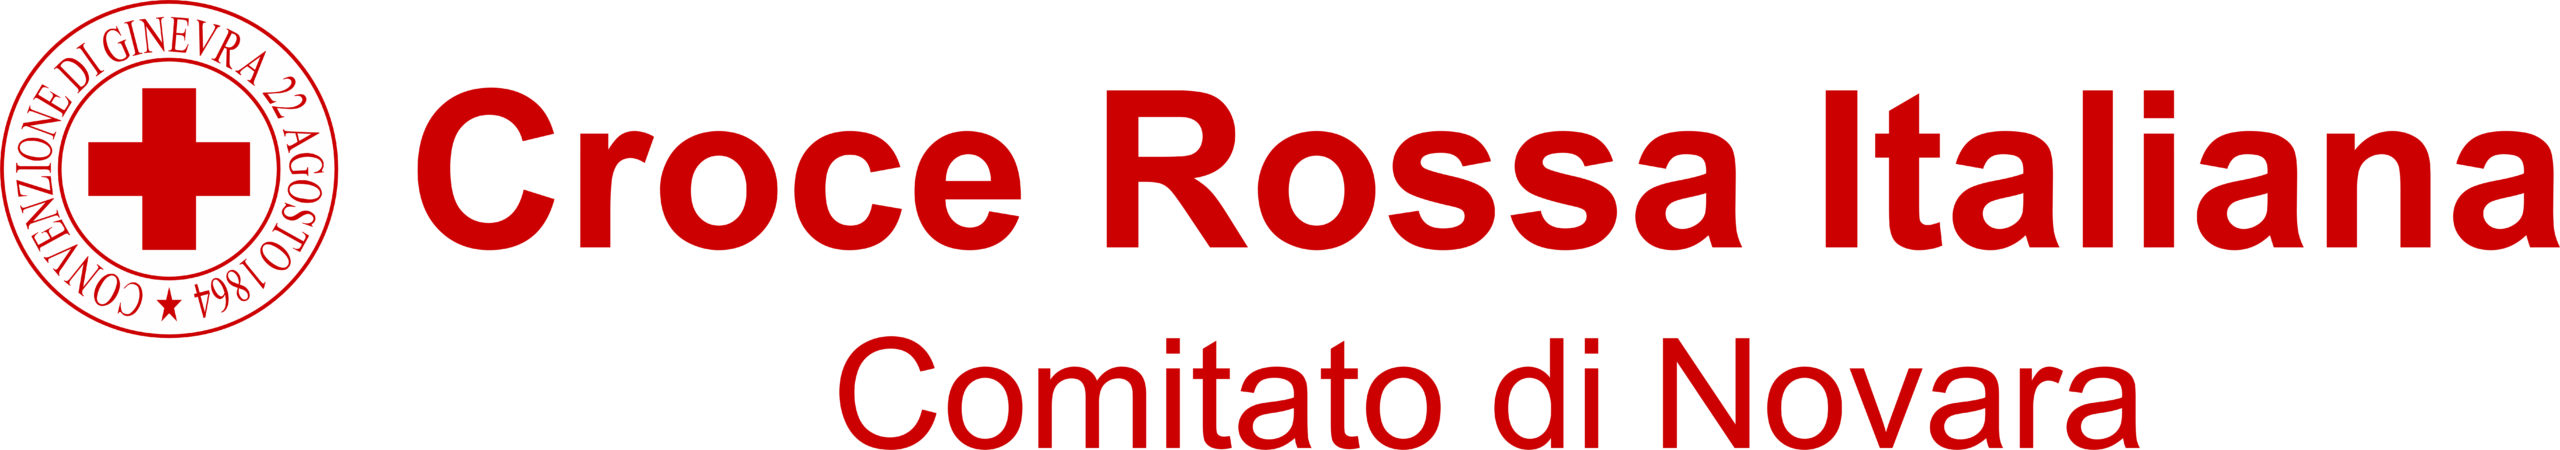 Croce Rossa Italiana - Comitato di Novara